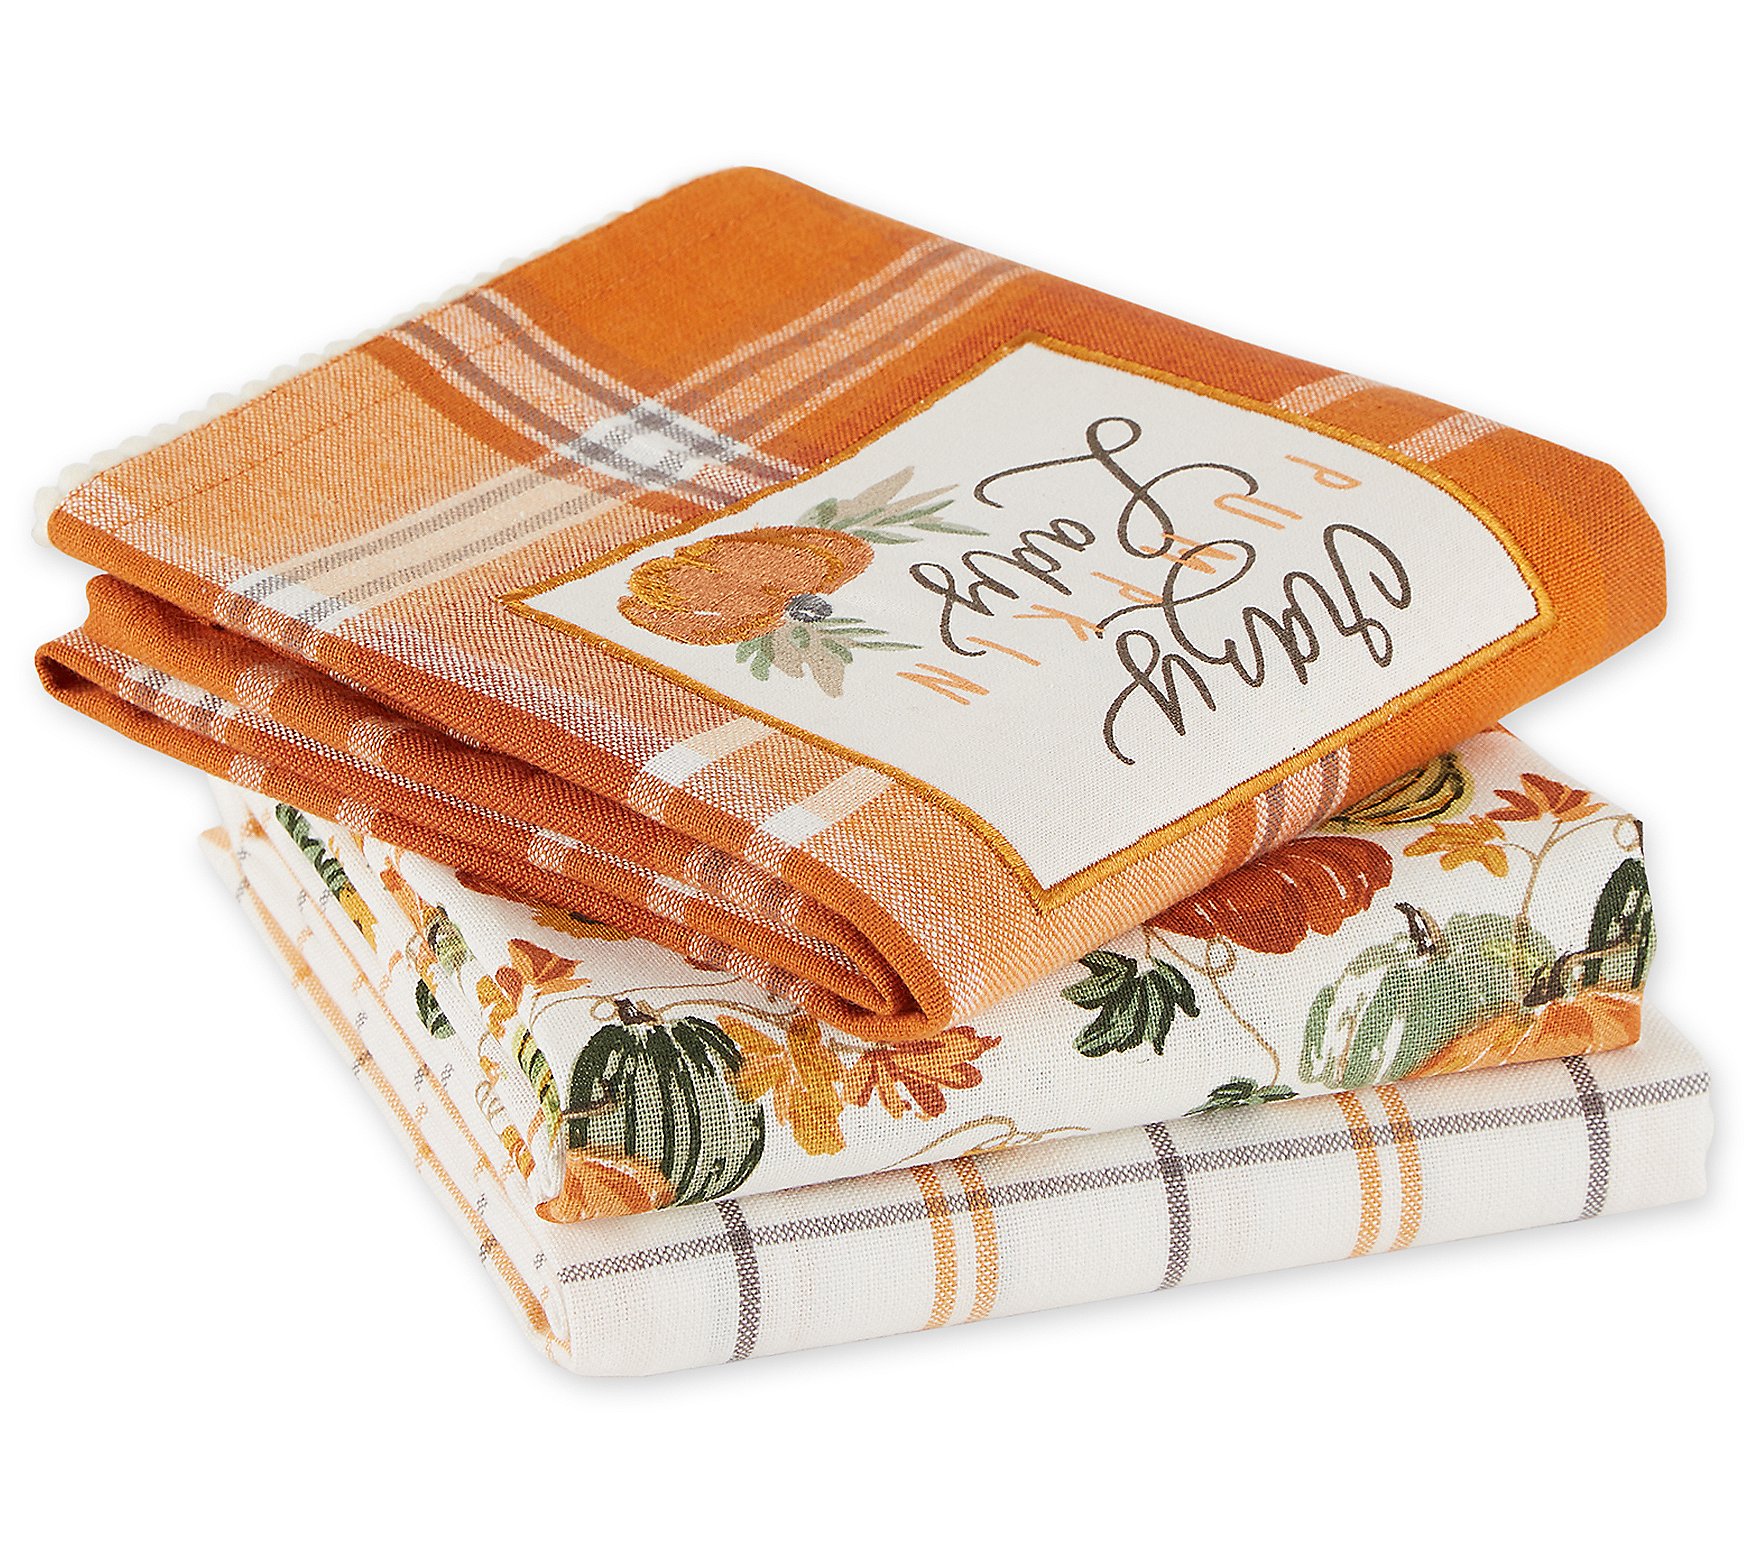 Design Imports Set of 3 Crazy Pumpkin Lady Kitchen Towels